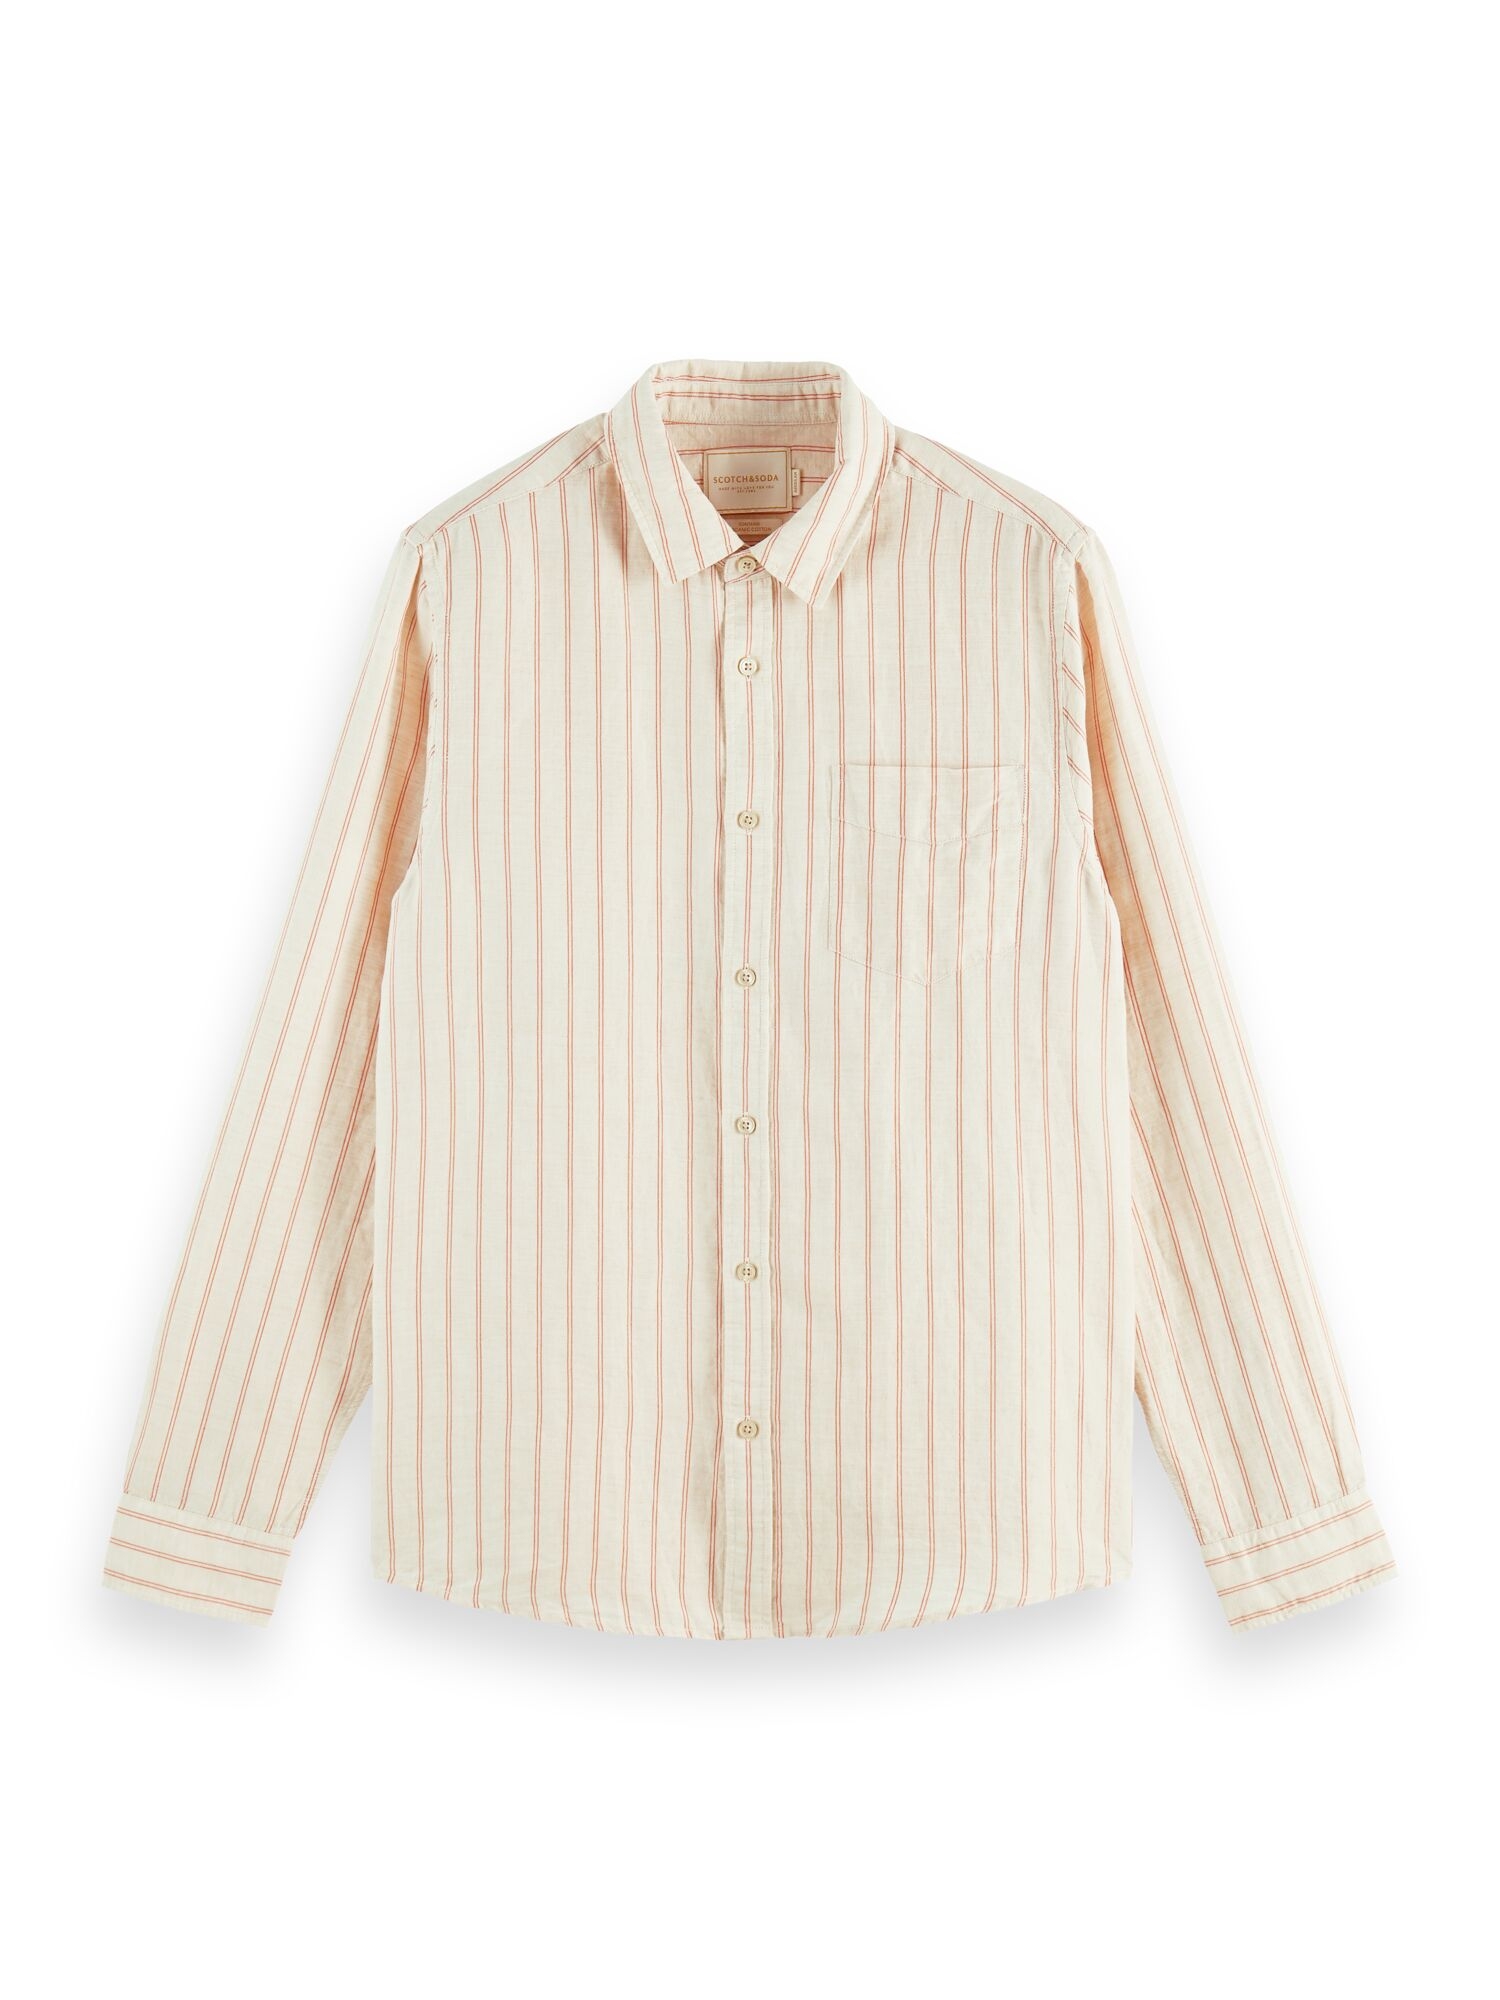 Scotch & Soda | REGULAR FIT- Striped shirt with organic cotton blend 2